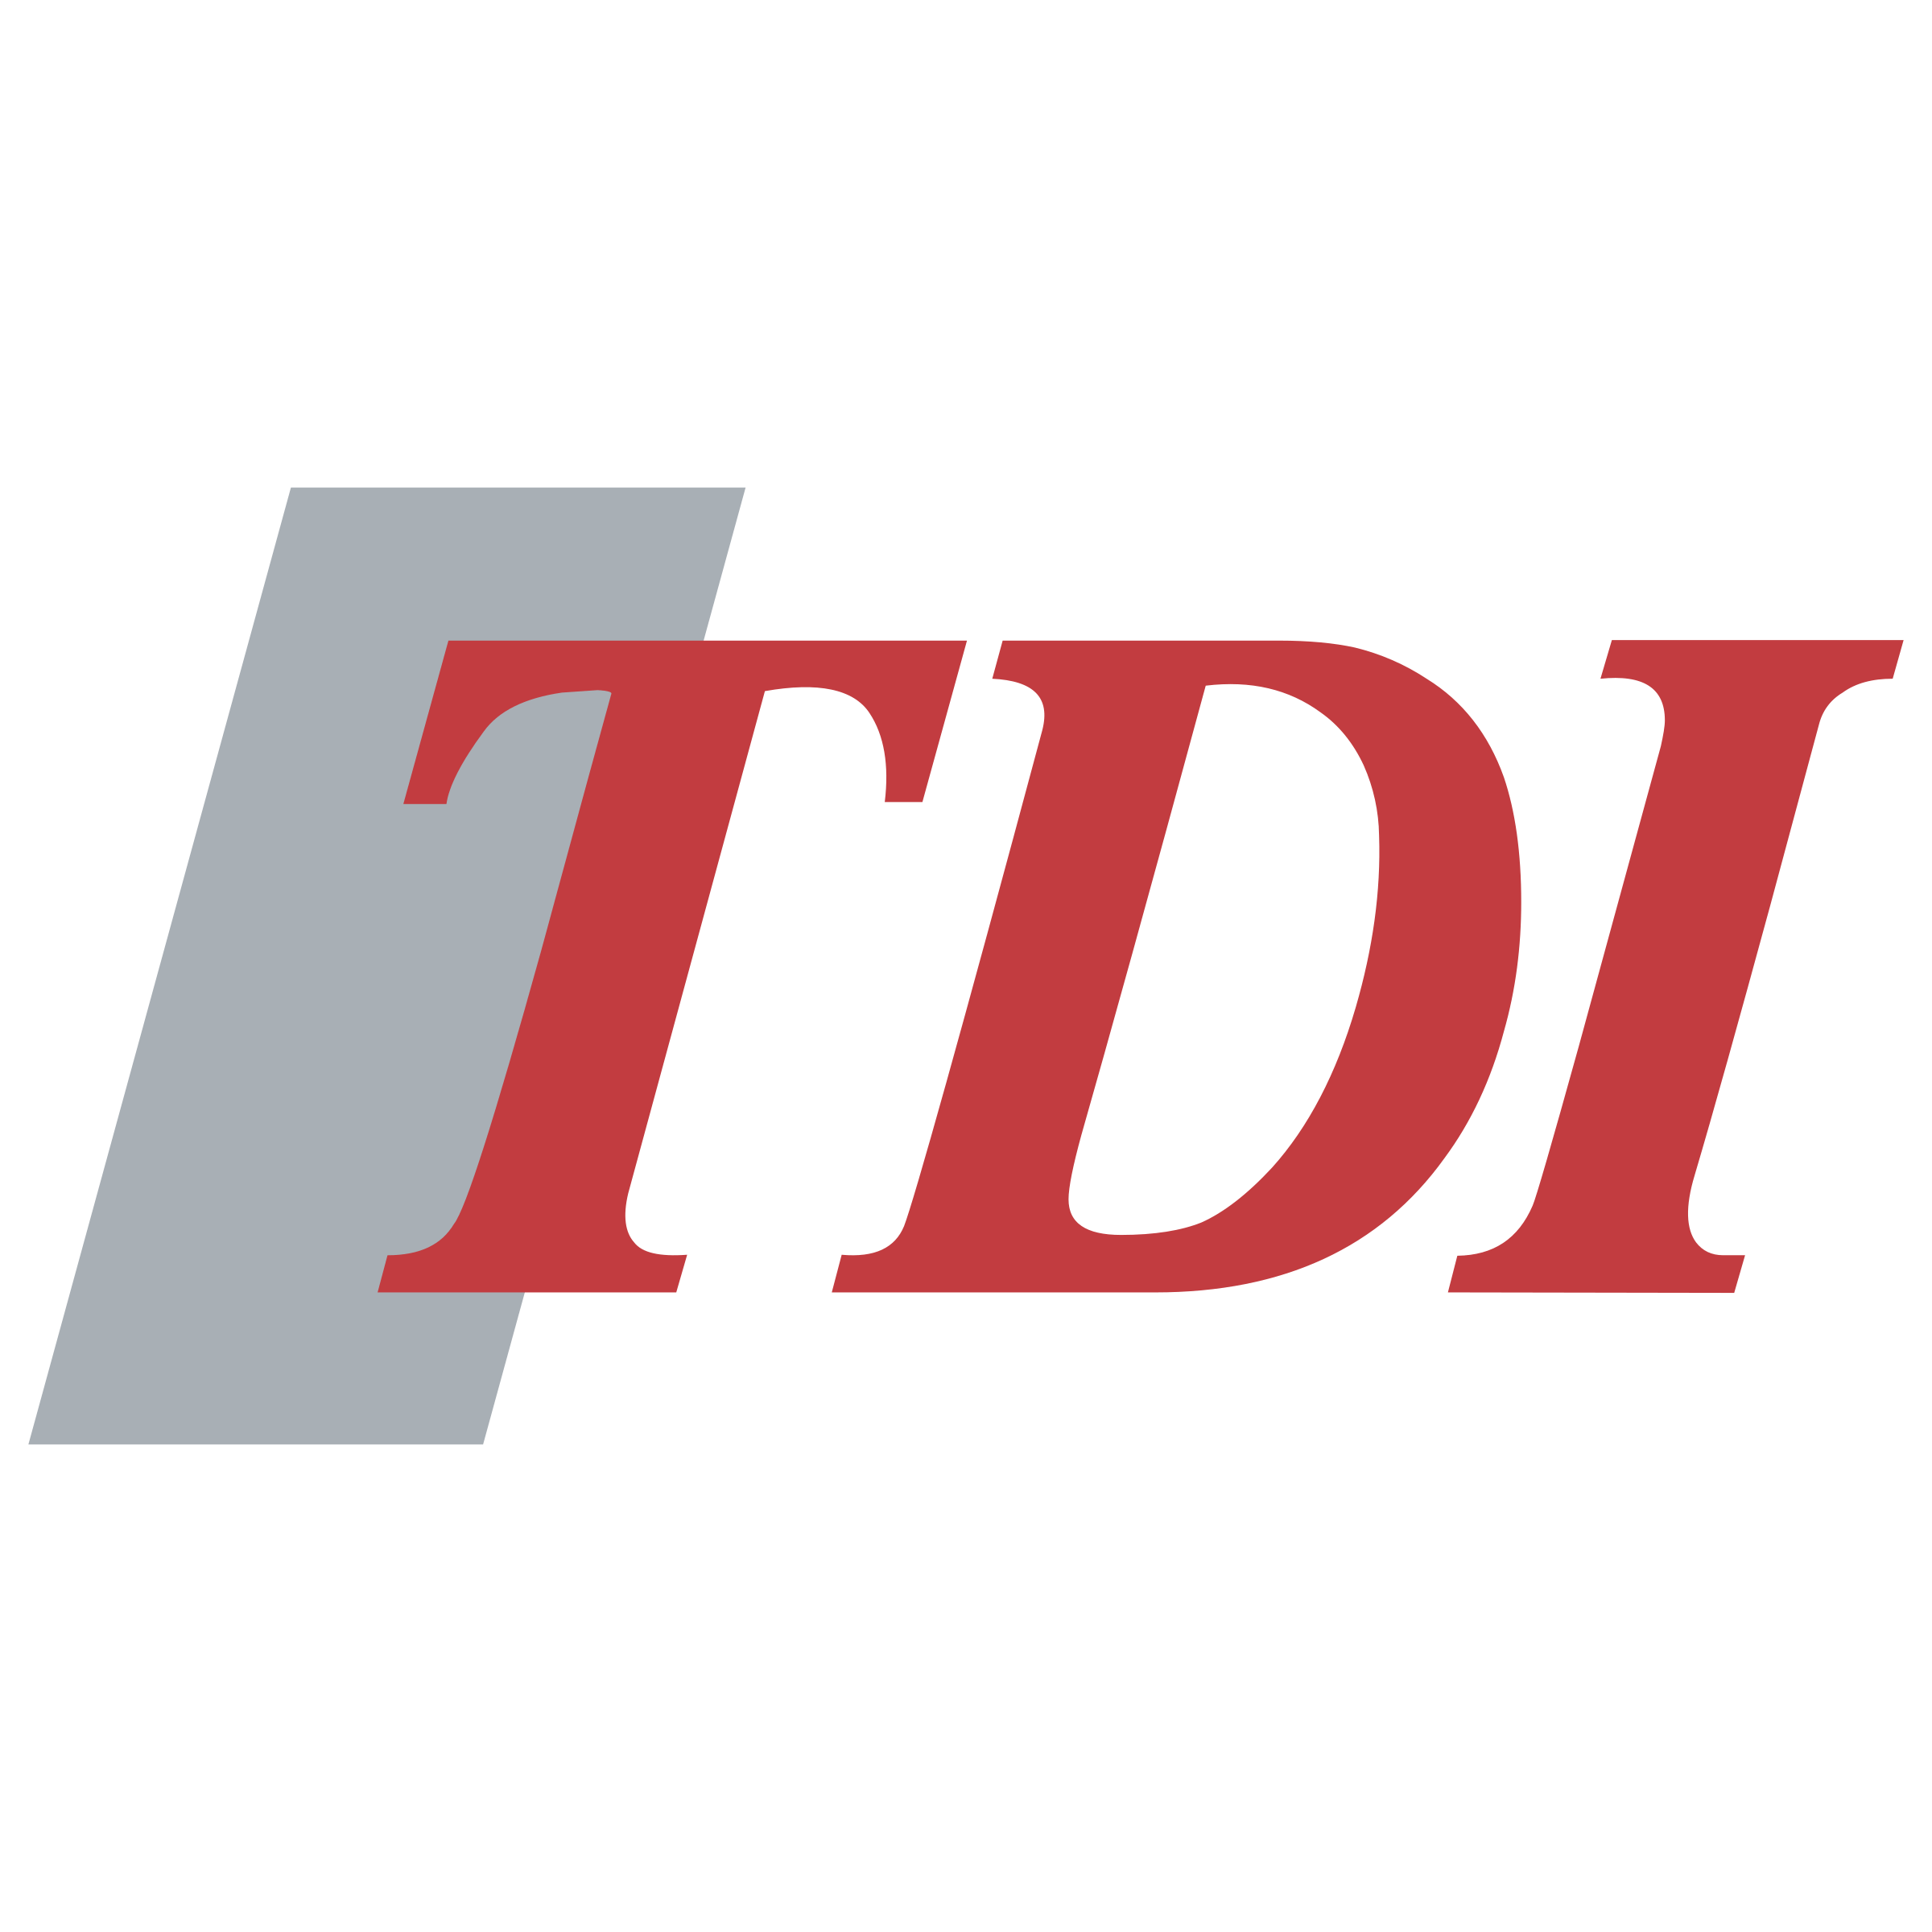 TDI Logo - TDI Logo PNG Transparent & SVG Vector - Freebie Supply